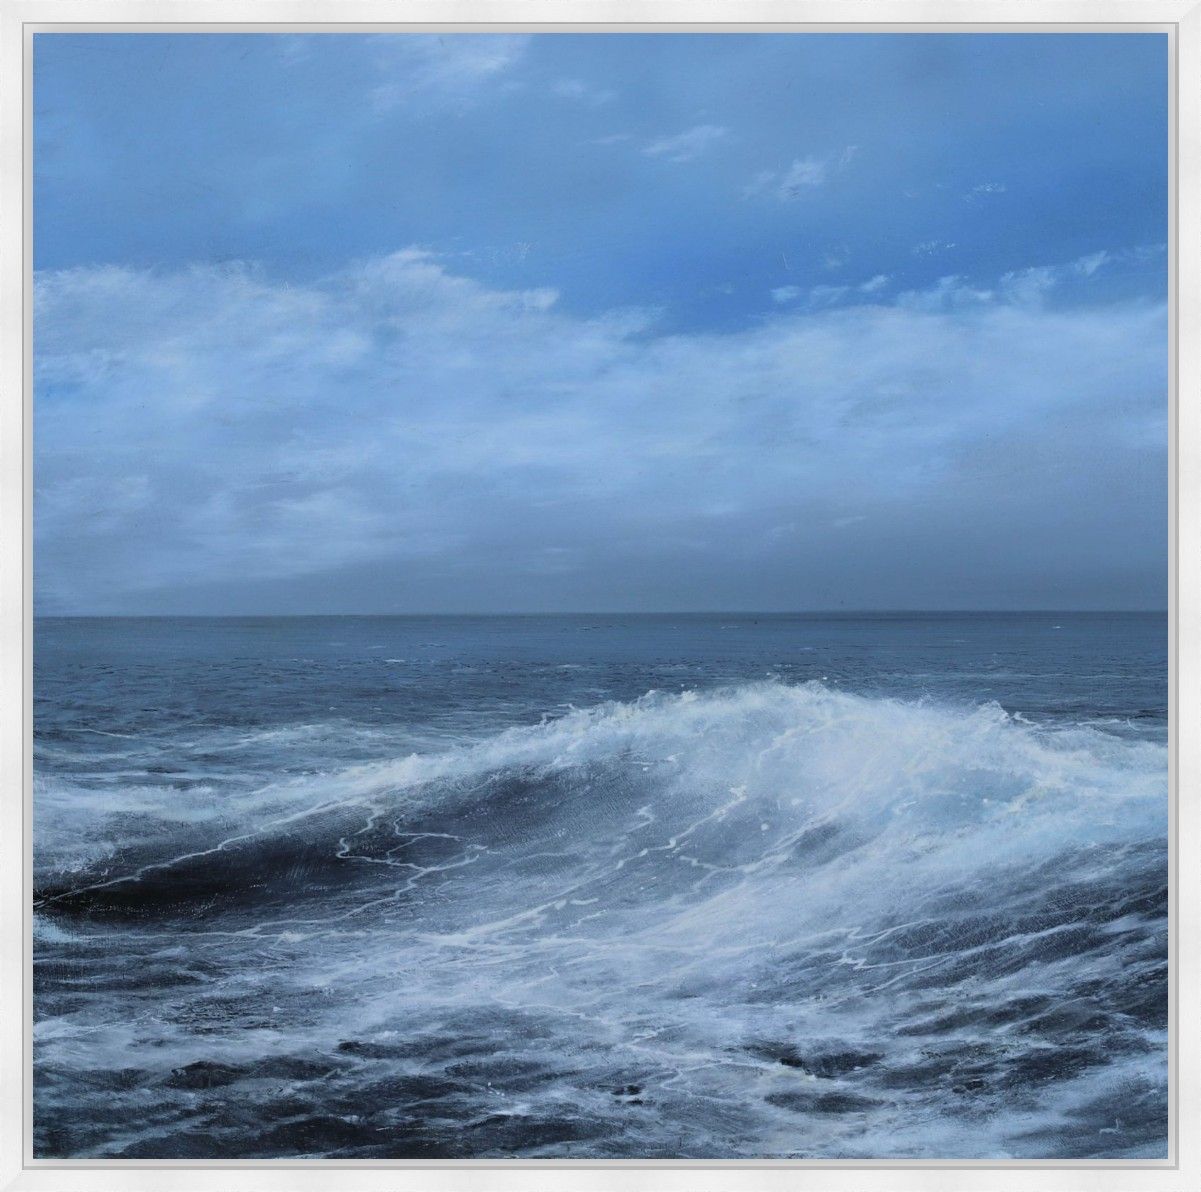 Watching Waves II by Garry Pereira